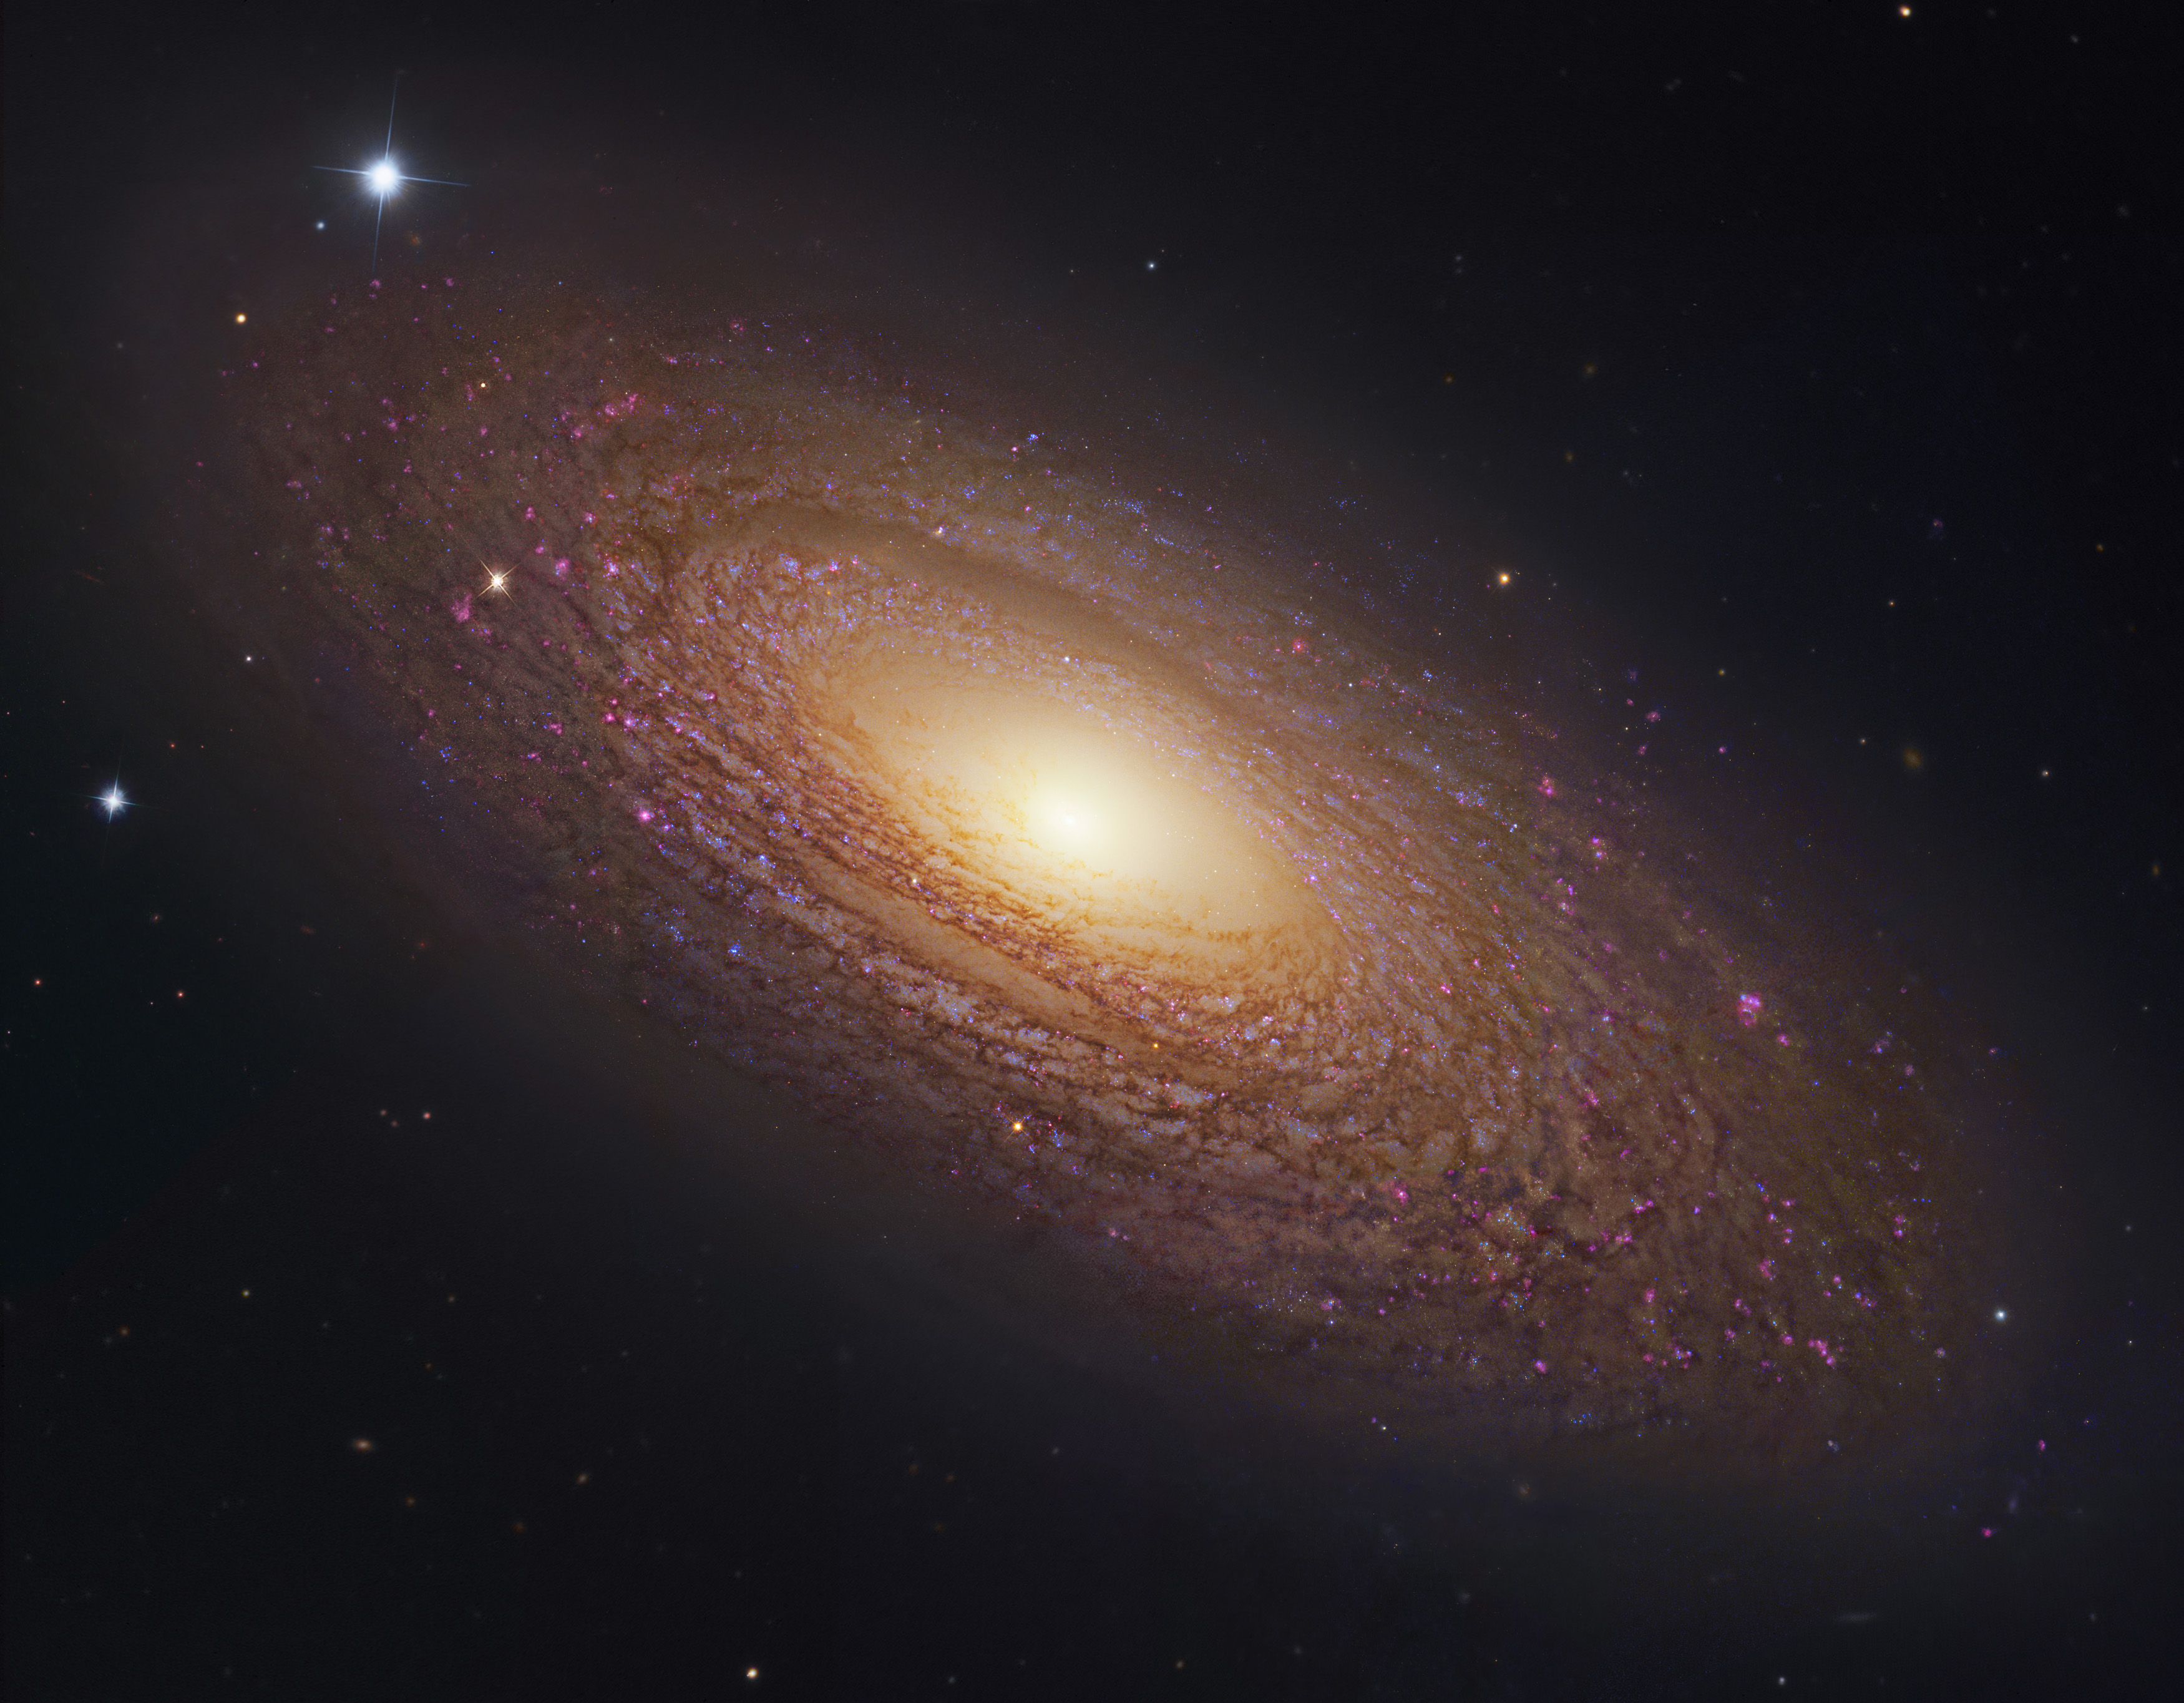 La massive et proche galaxie spirale NGC 2841